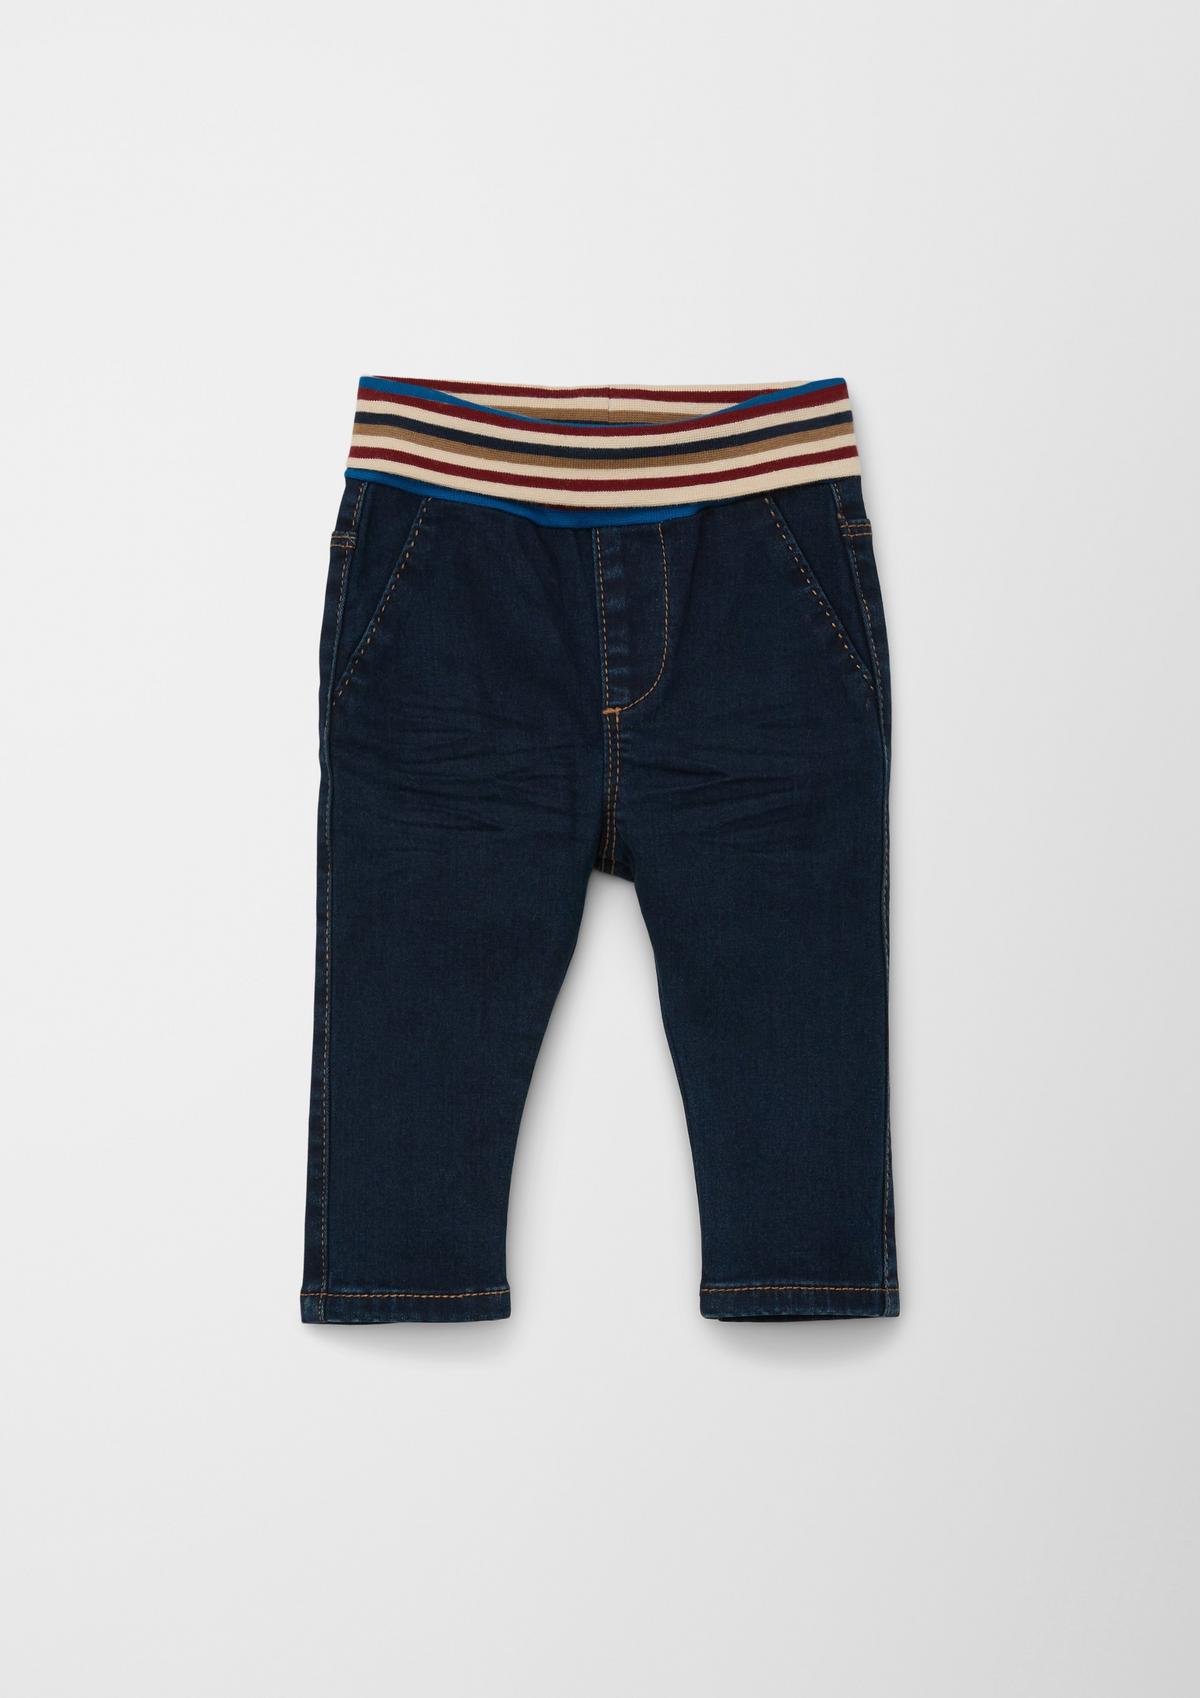 s.Oliver Jeans / skinny fit / high rise / slim leg / turn-down waistband